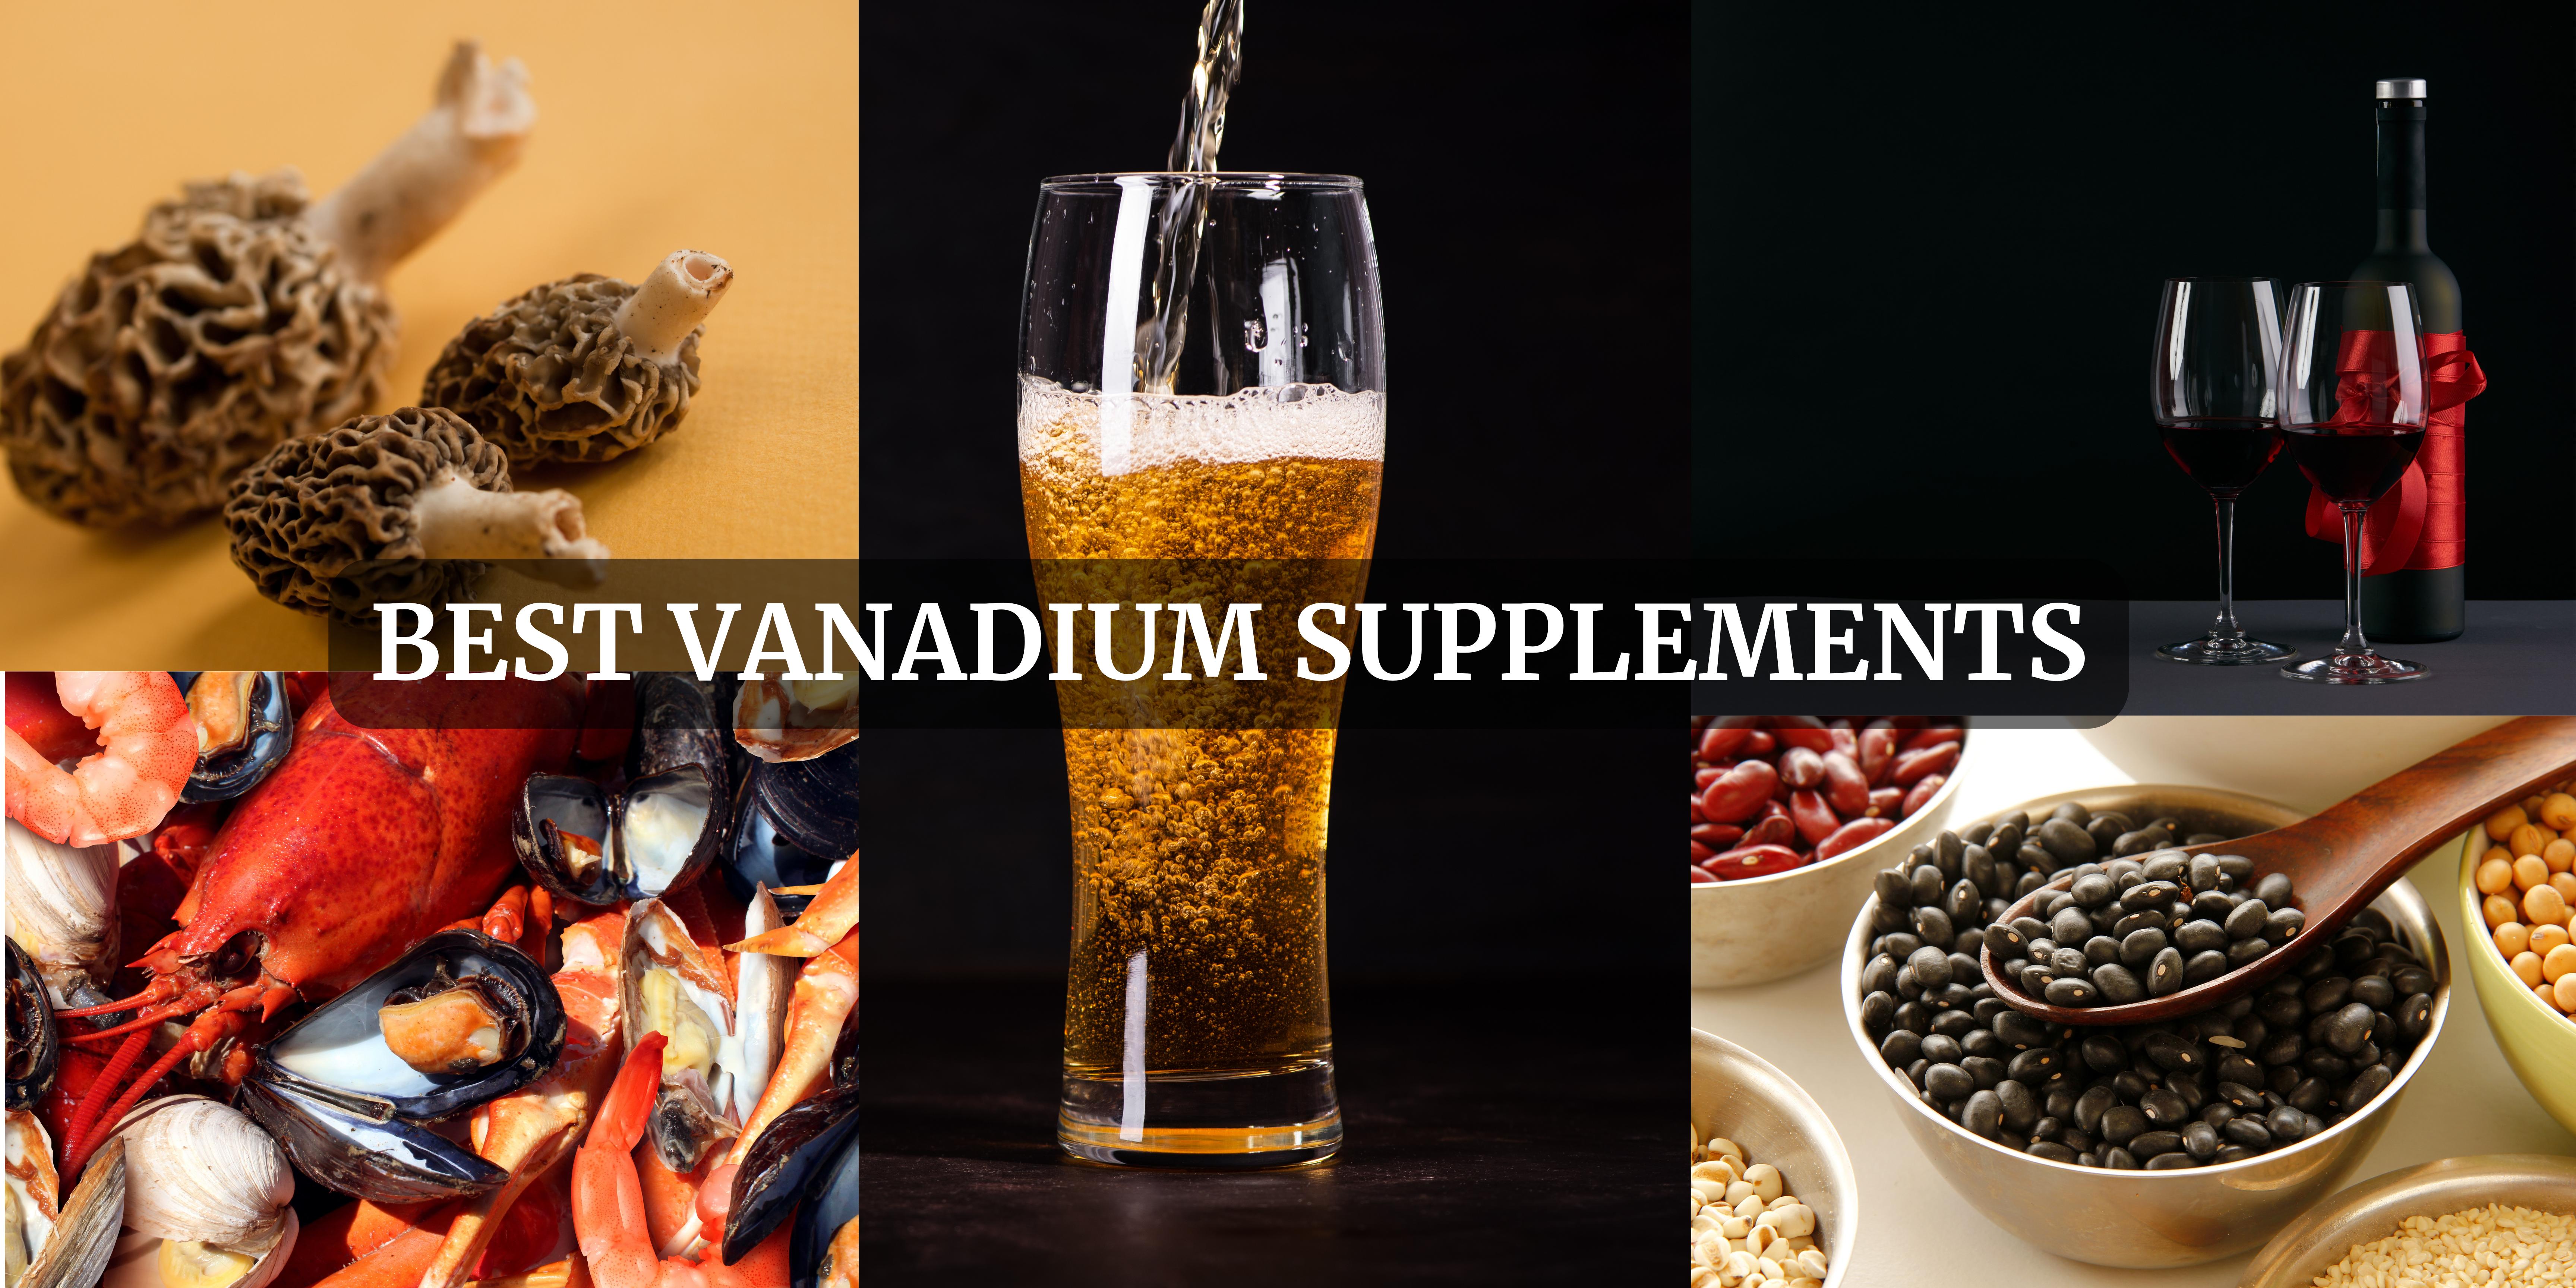 Vanadium Supplements in the World